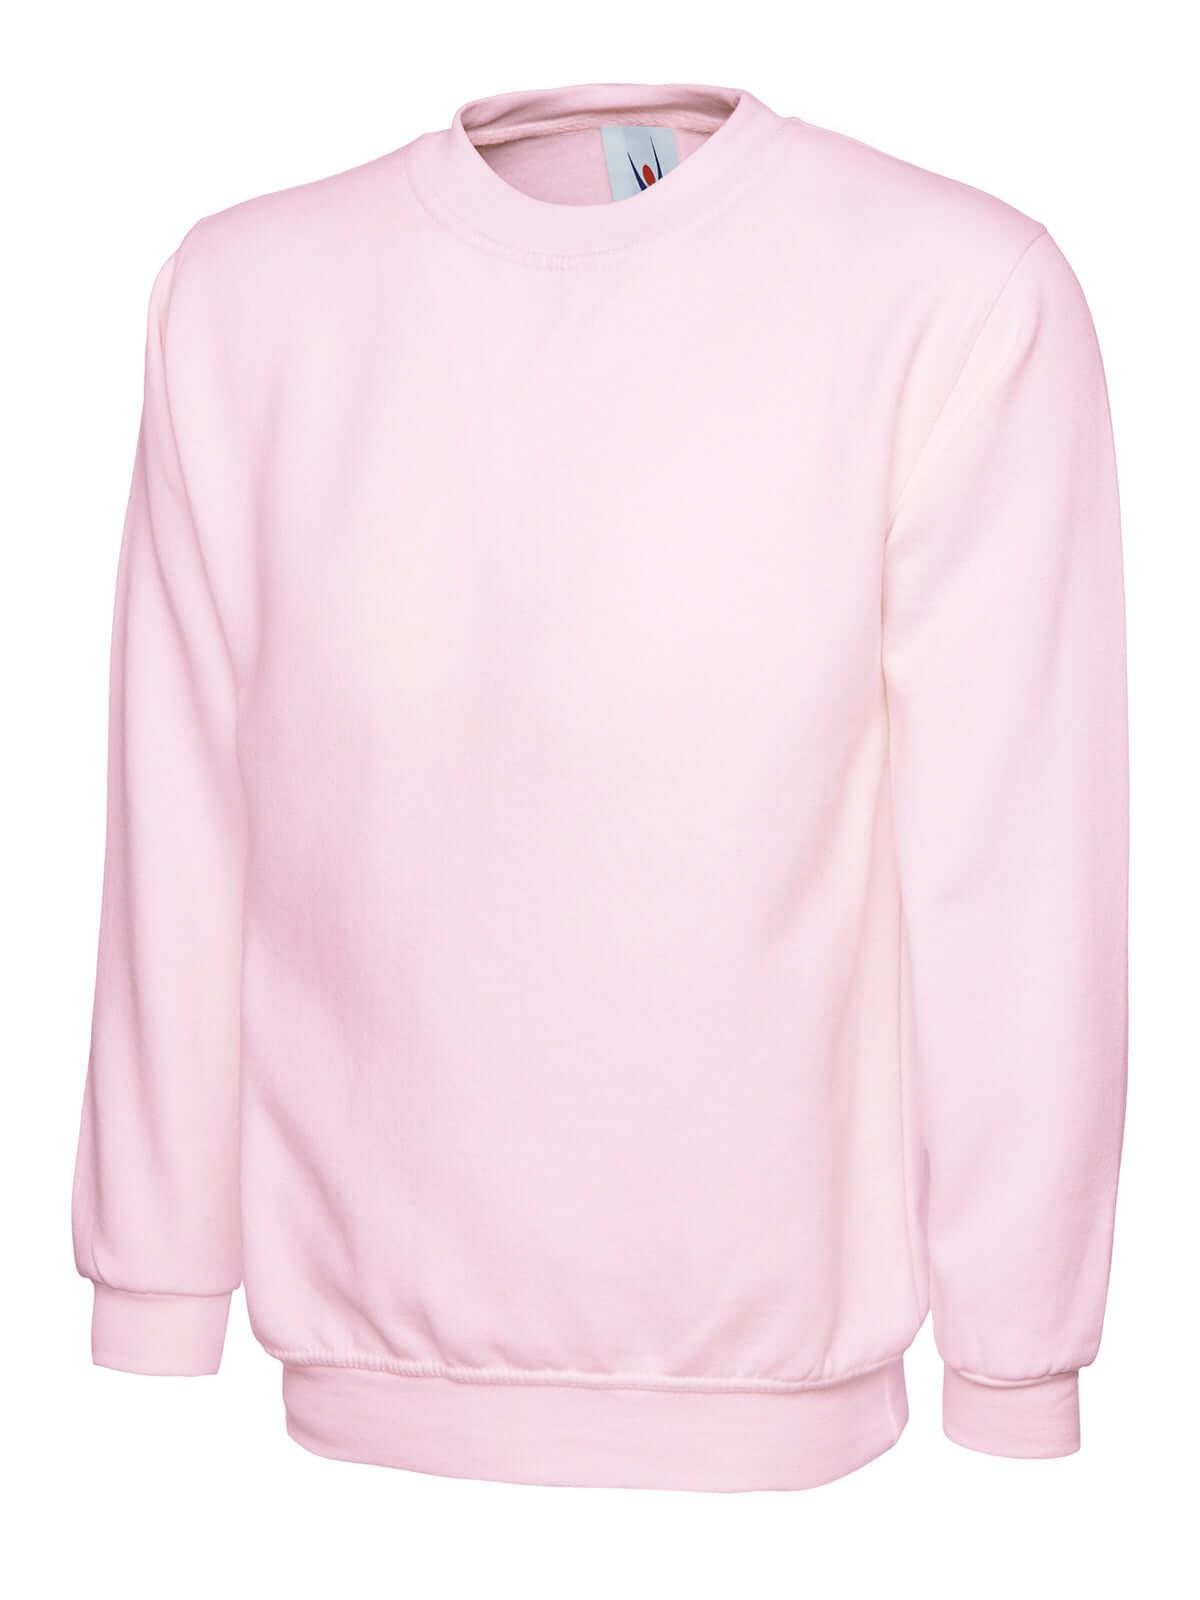 Pegasus Uniform Classic Sweatshirt - Pink